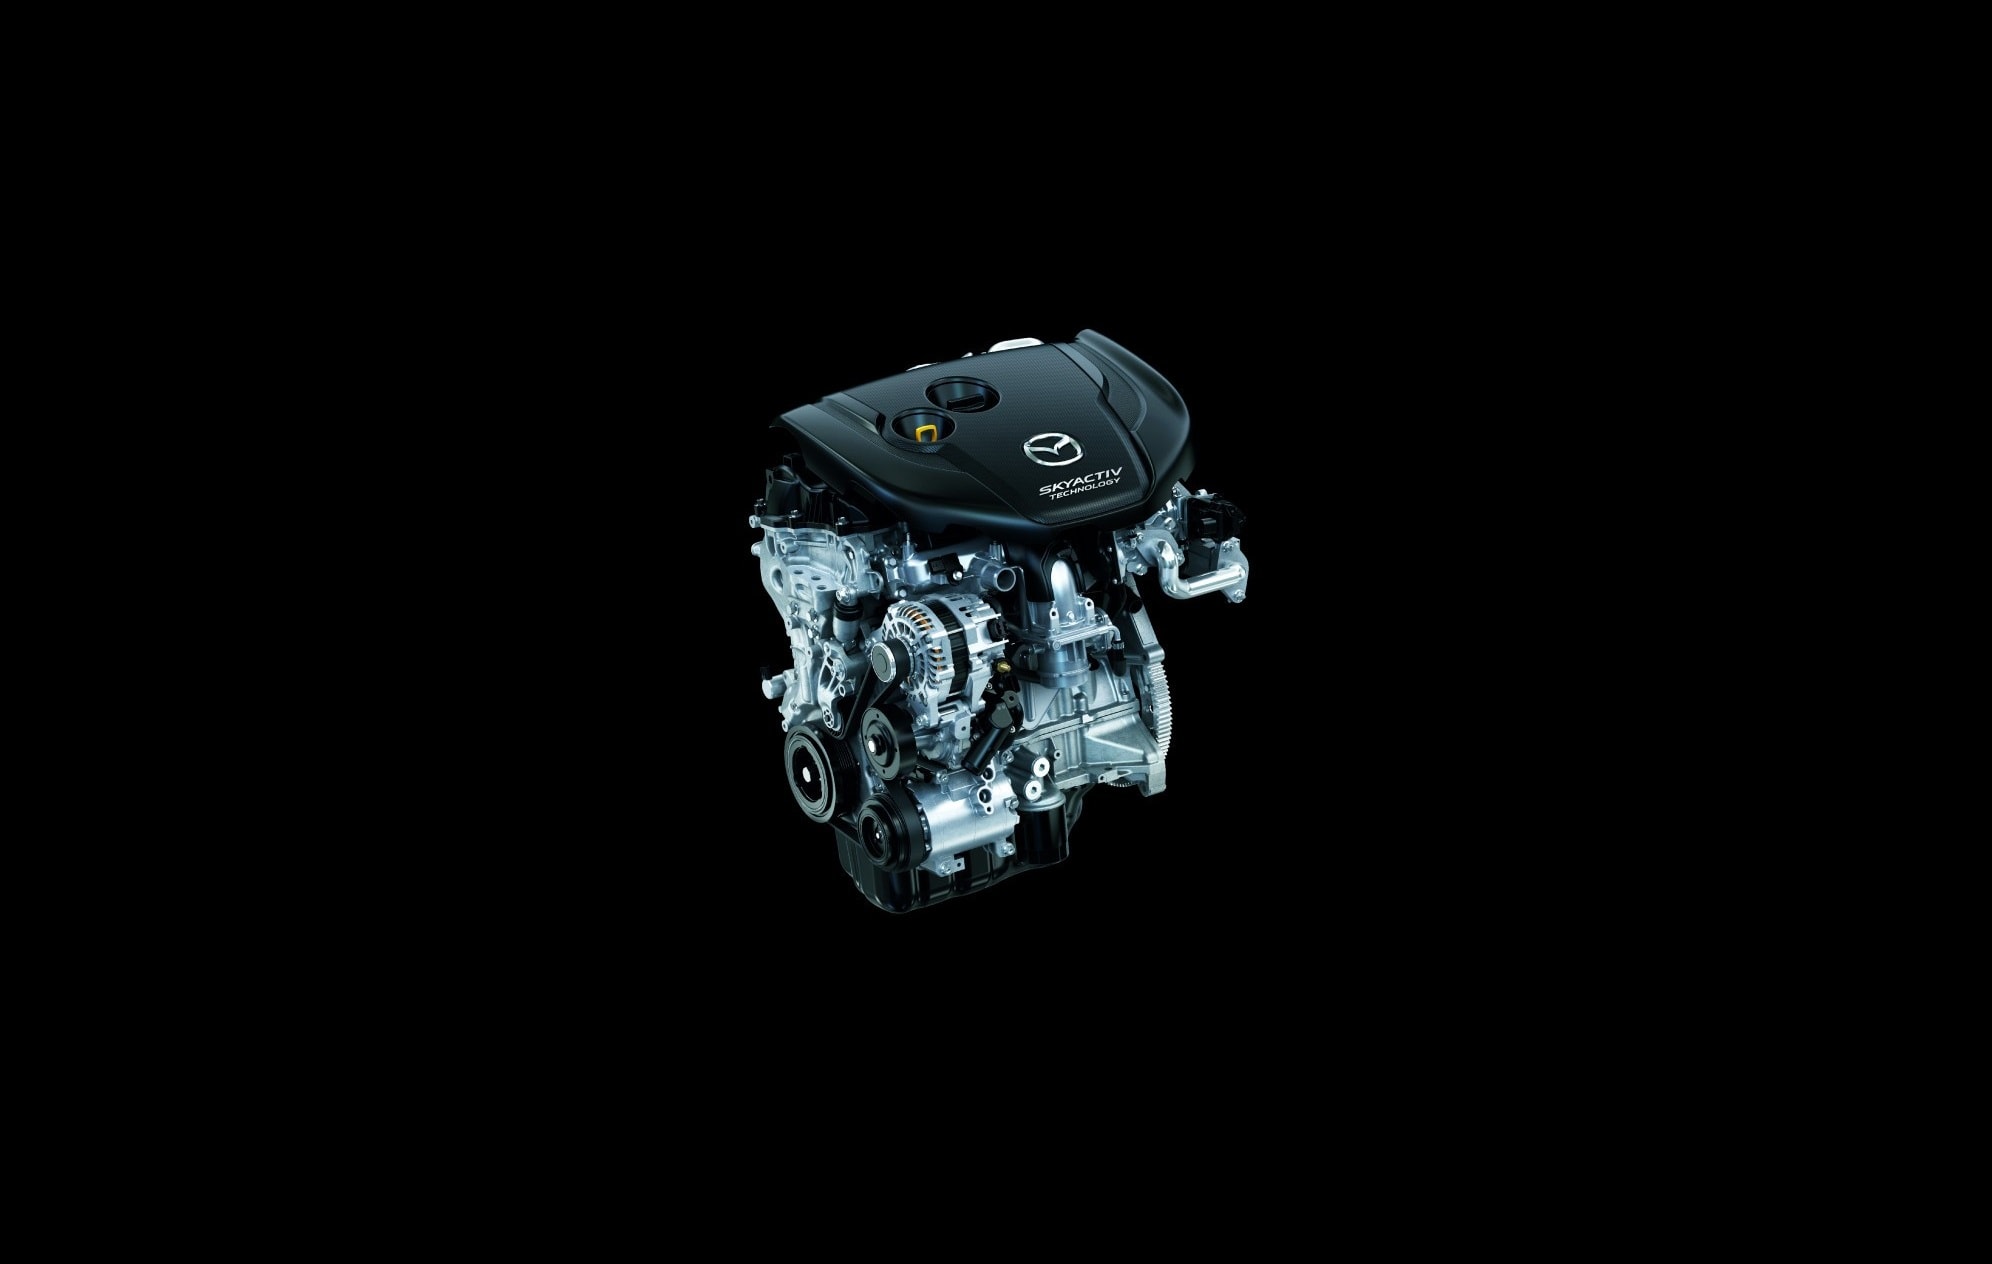 Mazda6 Diesel Discontinued in Europe, SkyActiv-D 2.2 Gets